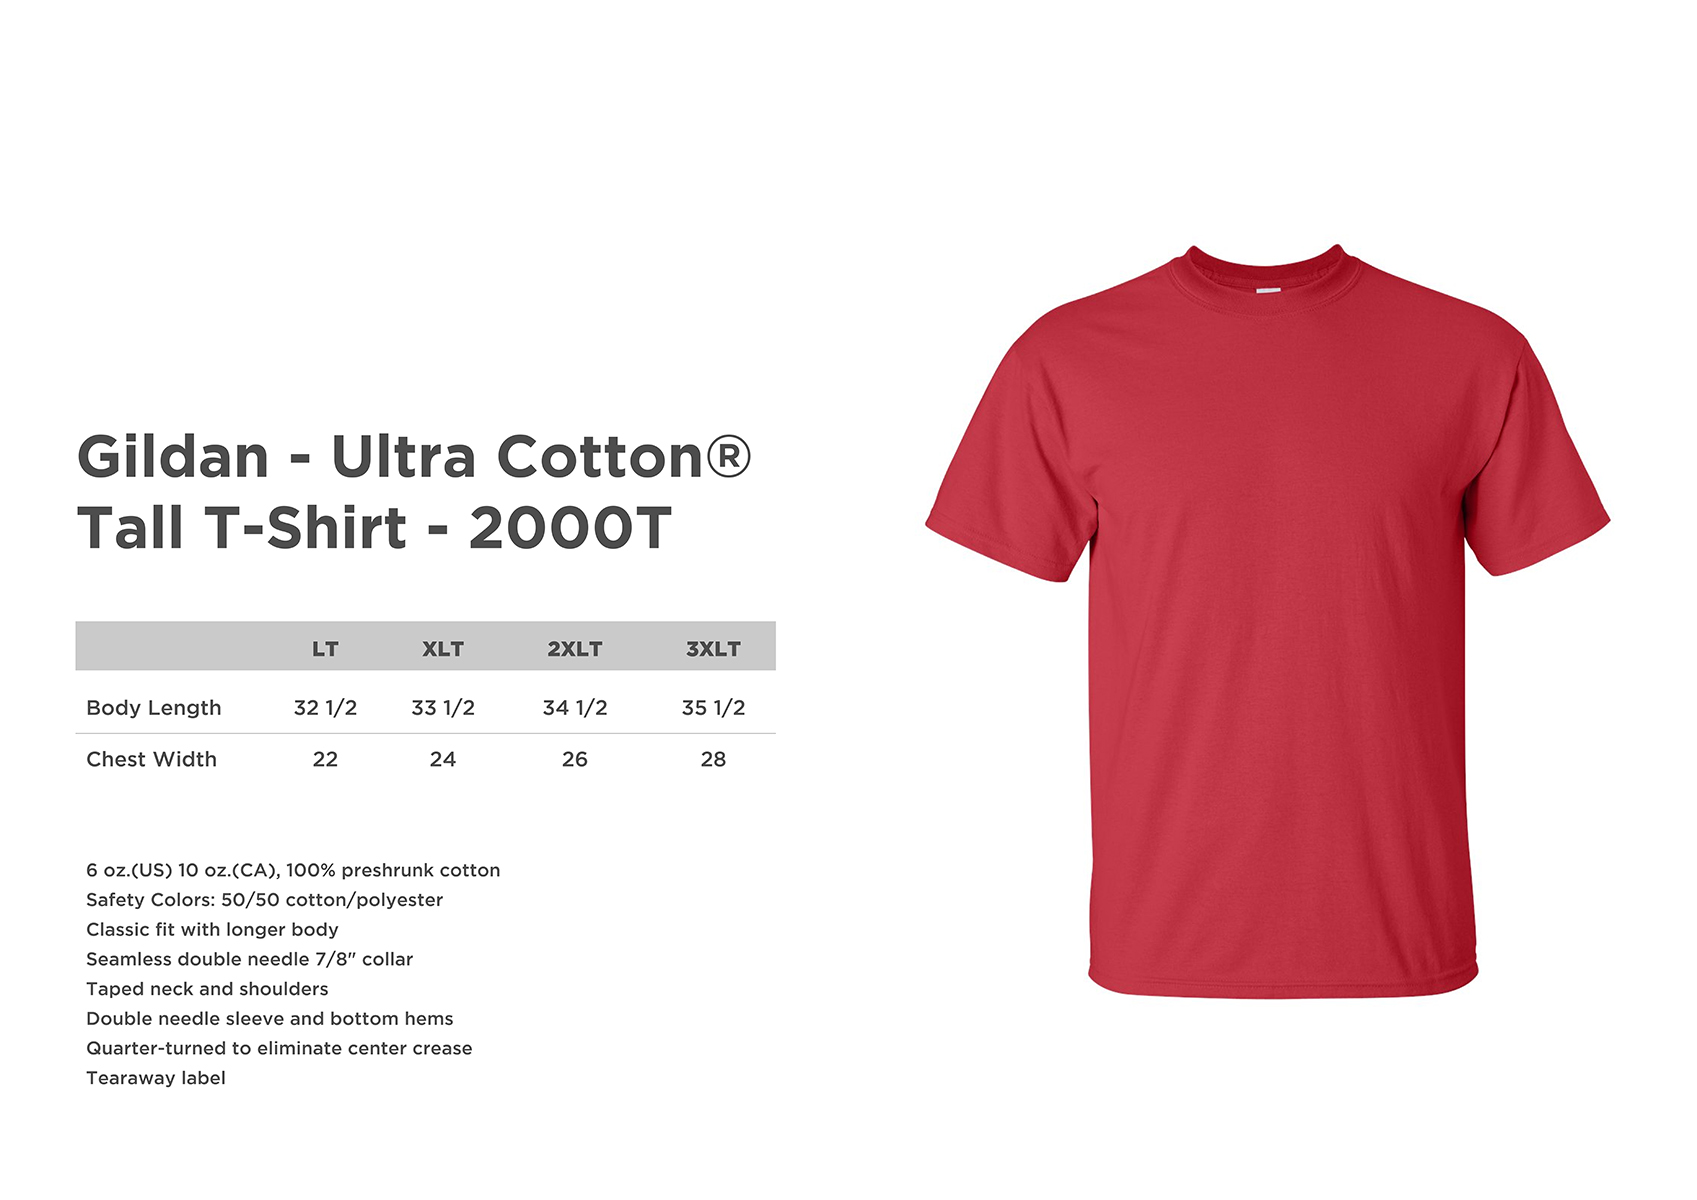 Big and Tall T Shirt for Men Tall Sizes Gildan Ultra Cotton Tall T-Shirt - 2000T T shirts XLT Black T Shirts for Men 2XLT 3XLT Big & Tall T Shirts Tall Mens Shirts Big & Tall T Shirts - image 2 of 2